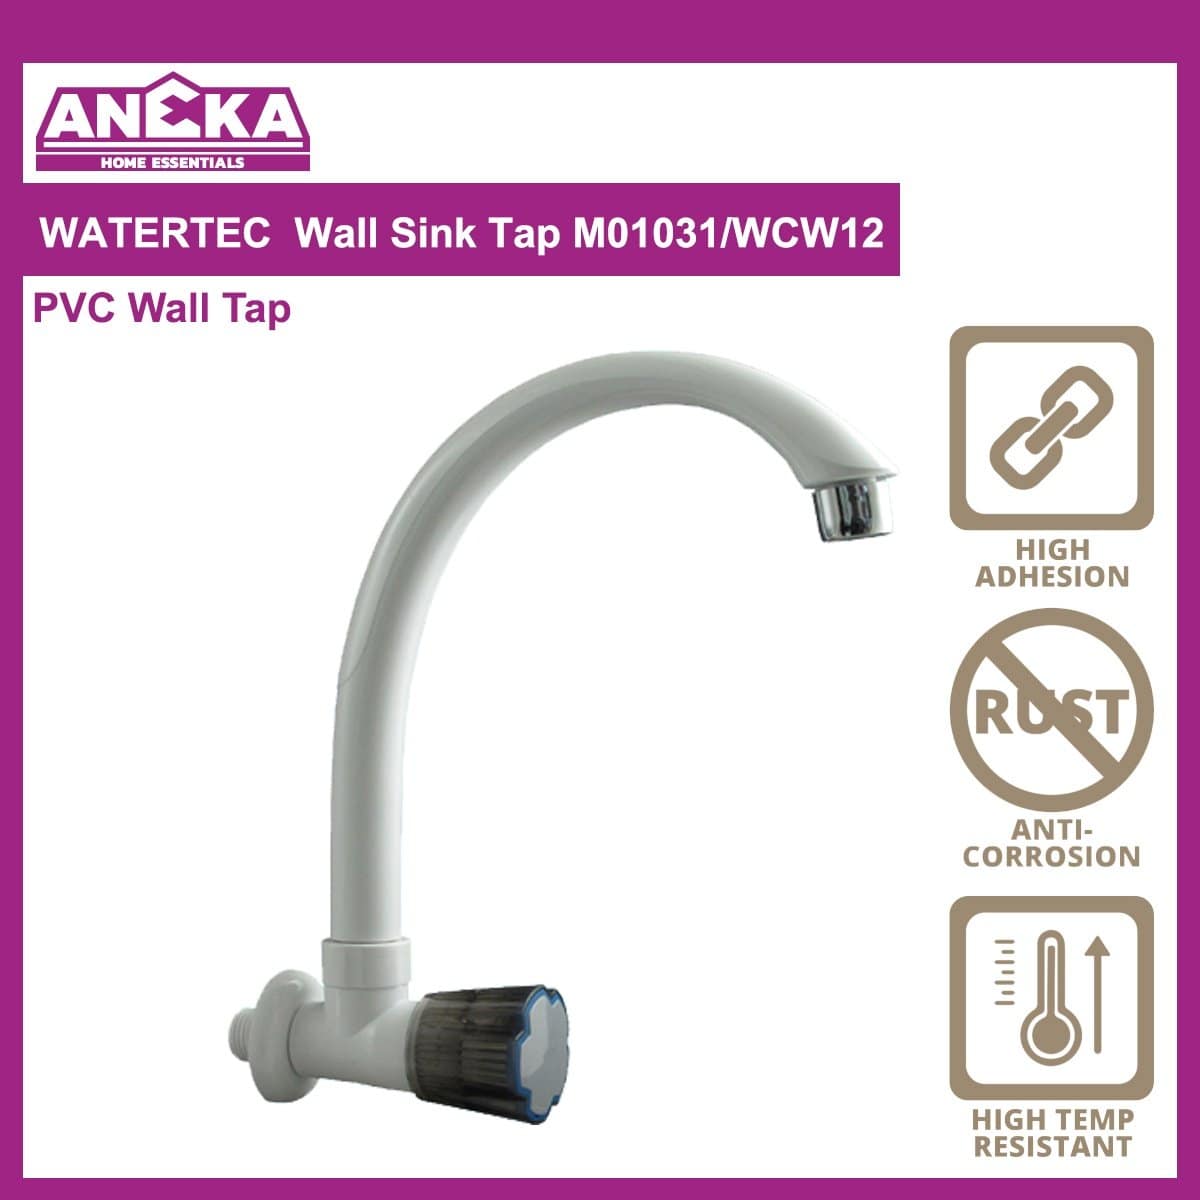 WATERTEC Wall Sink Tap WCW12/ M01031